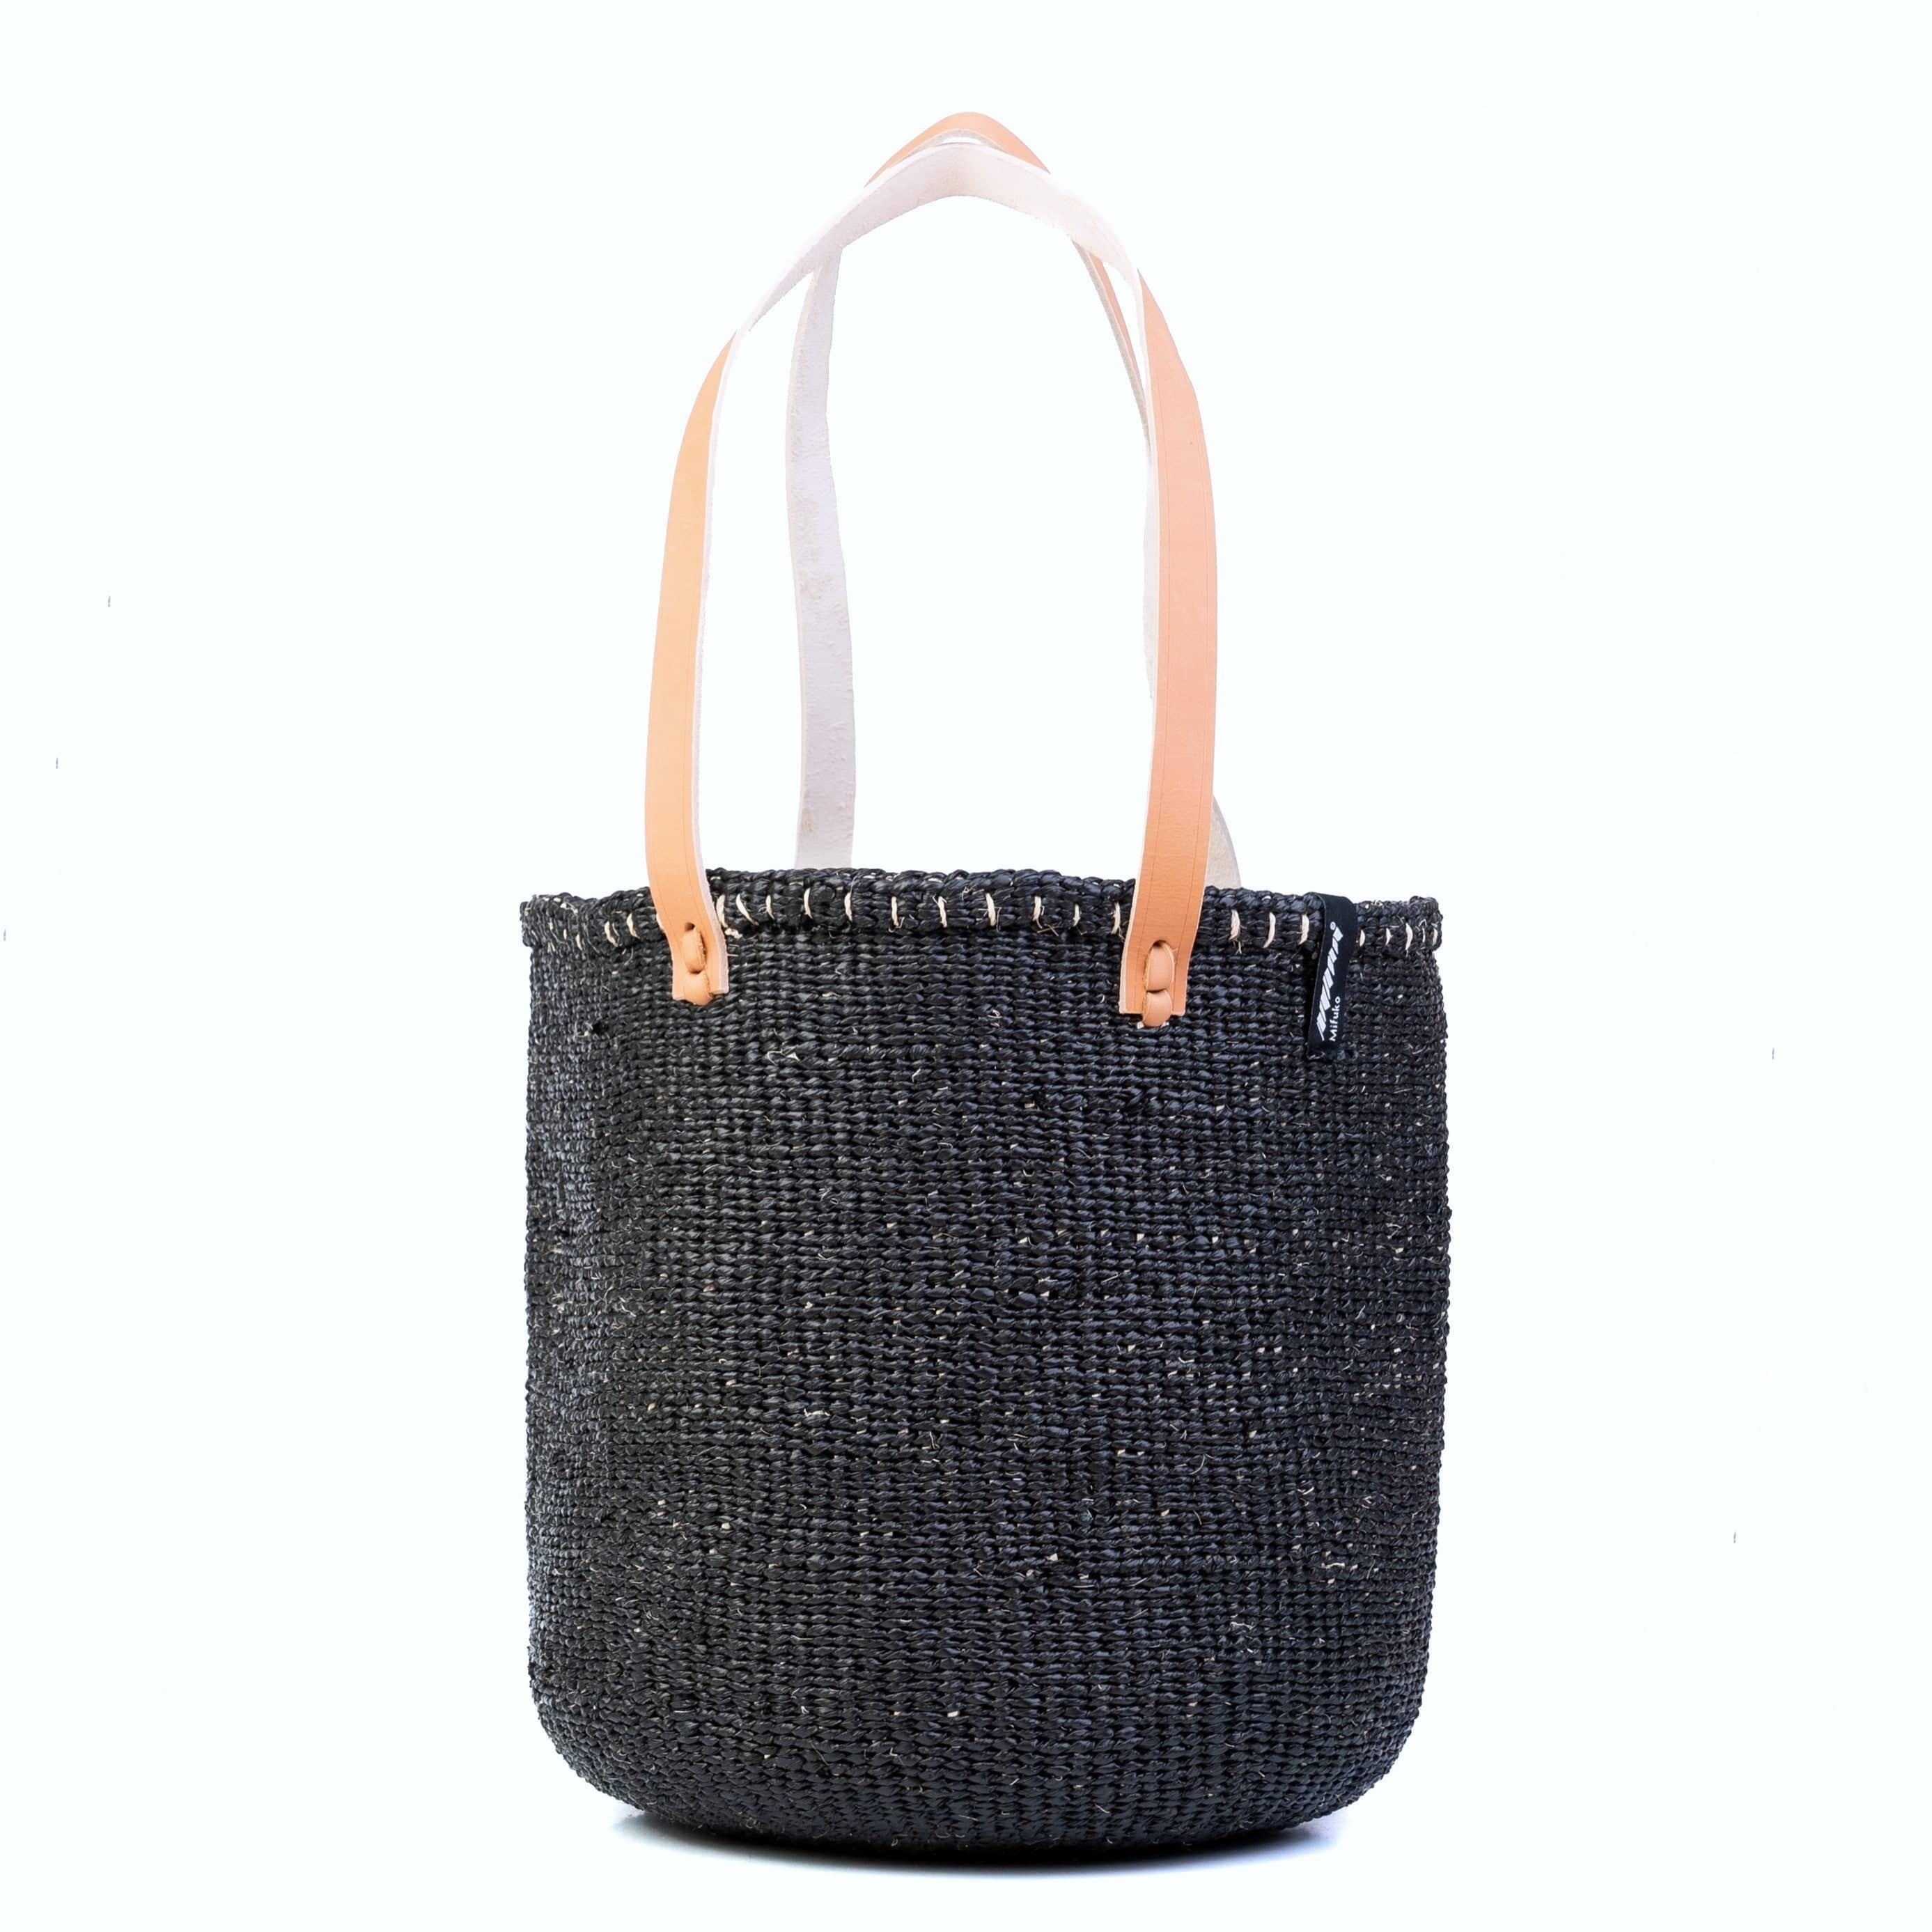 Mifuko Partly recycled plastic and sisal Shopper basket M Kiondo shopper basket | Black M